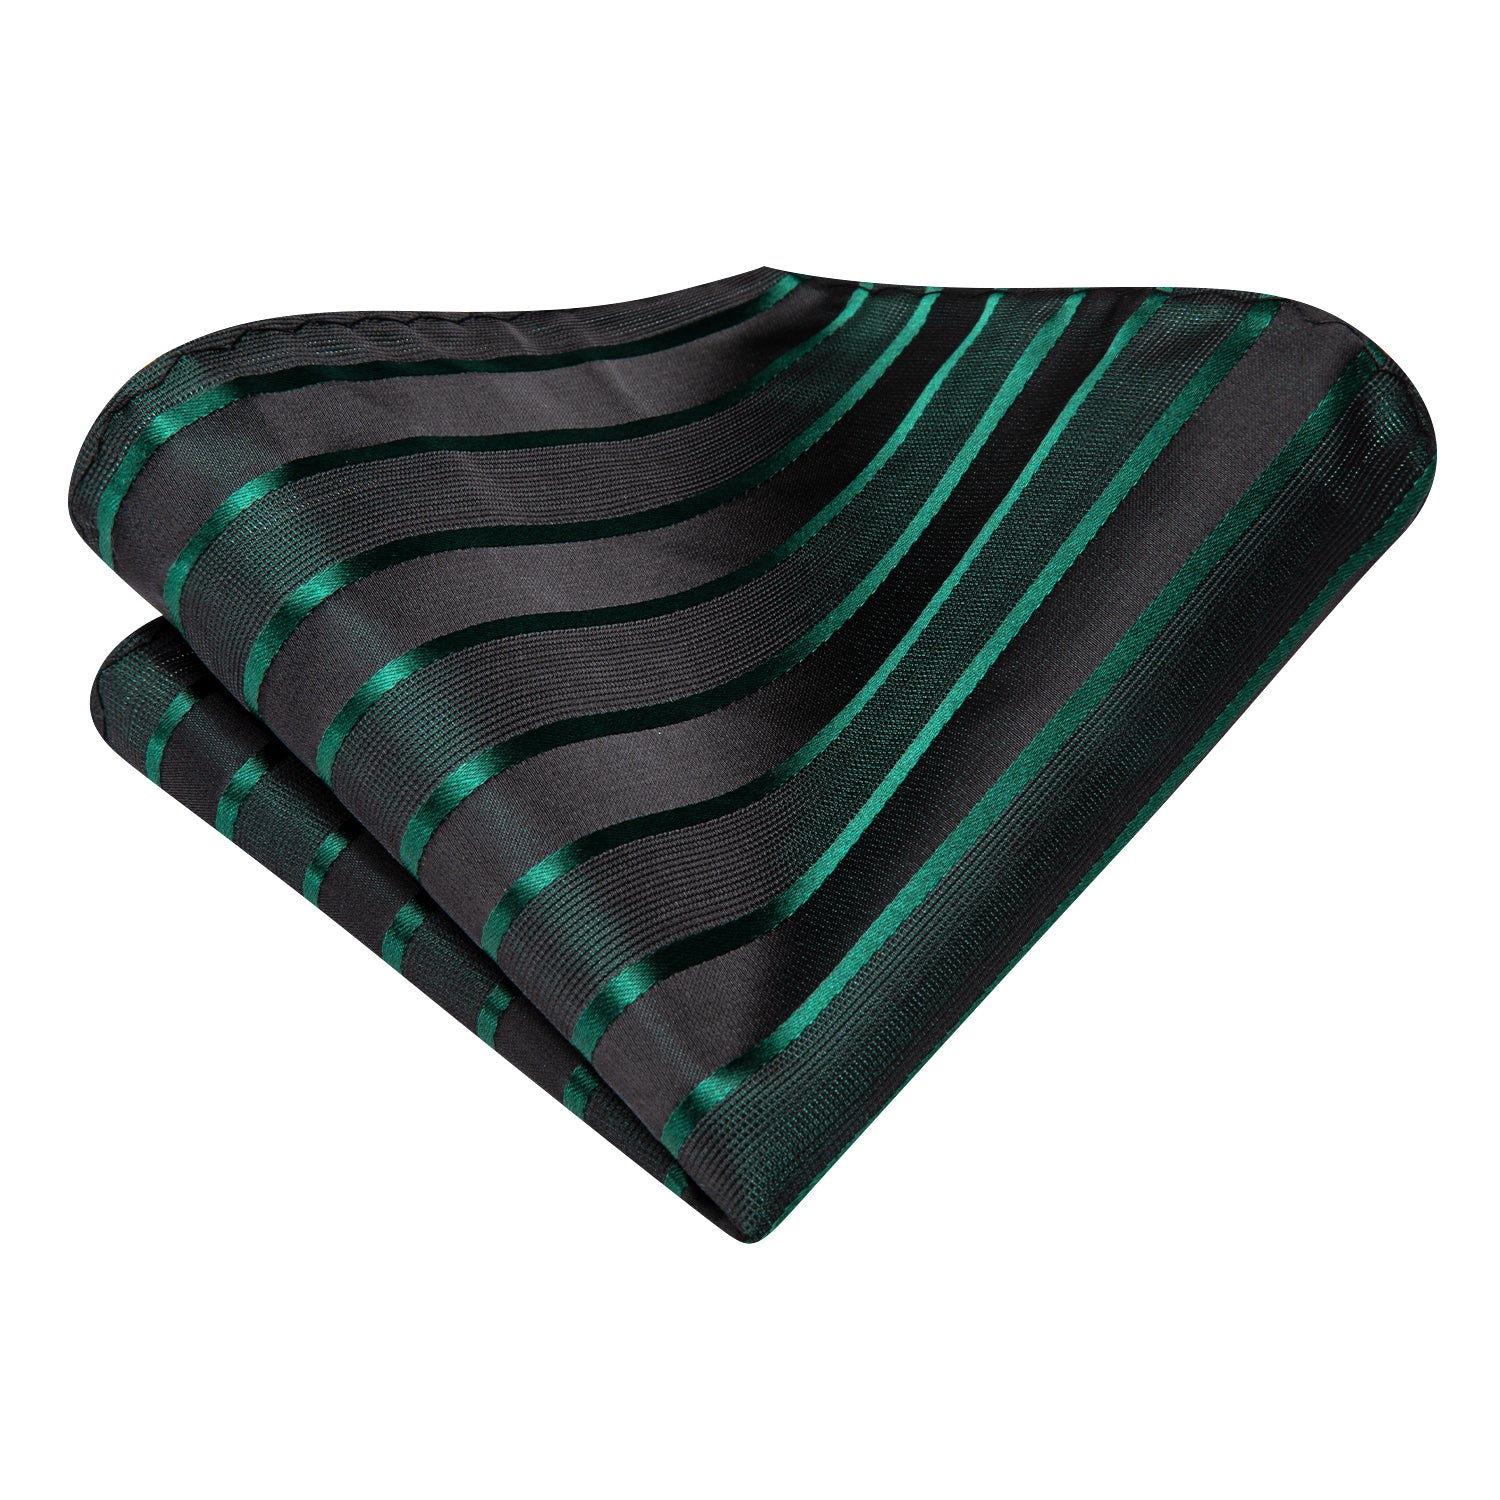 Hi-Tie Black Green Striped Men's Tie Pocket Square Cufflinks Set